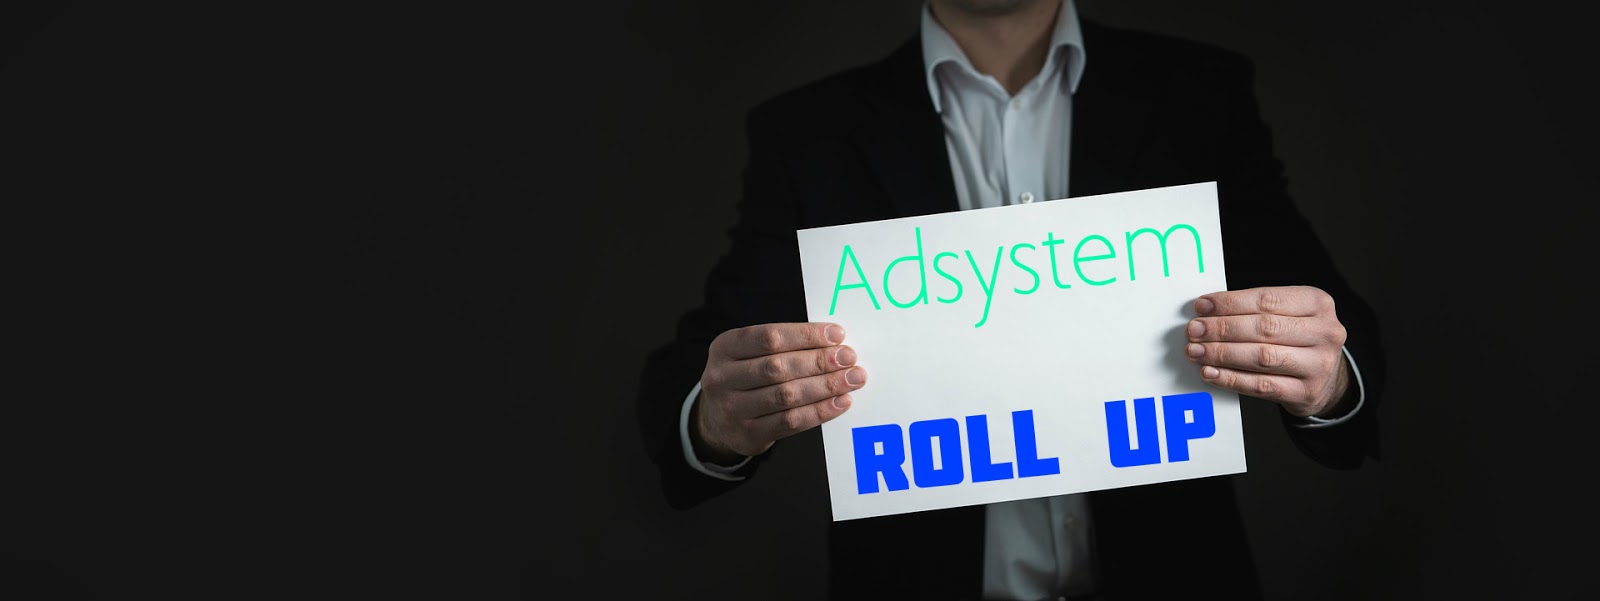 Adsystem » Roll up, czyli pomysł na reklamę